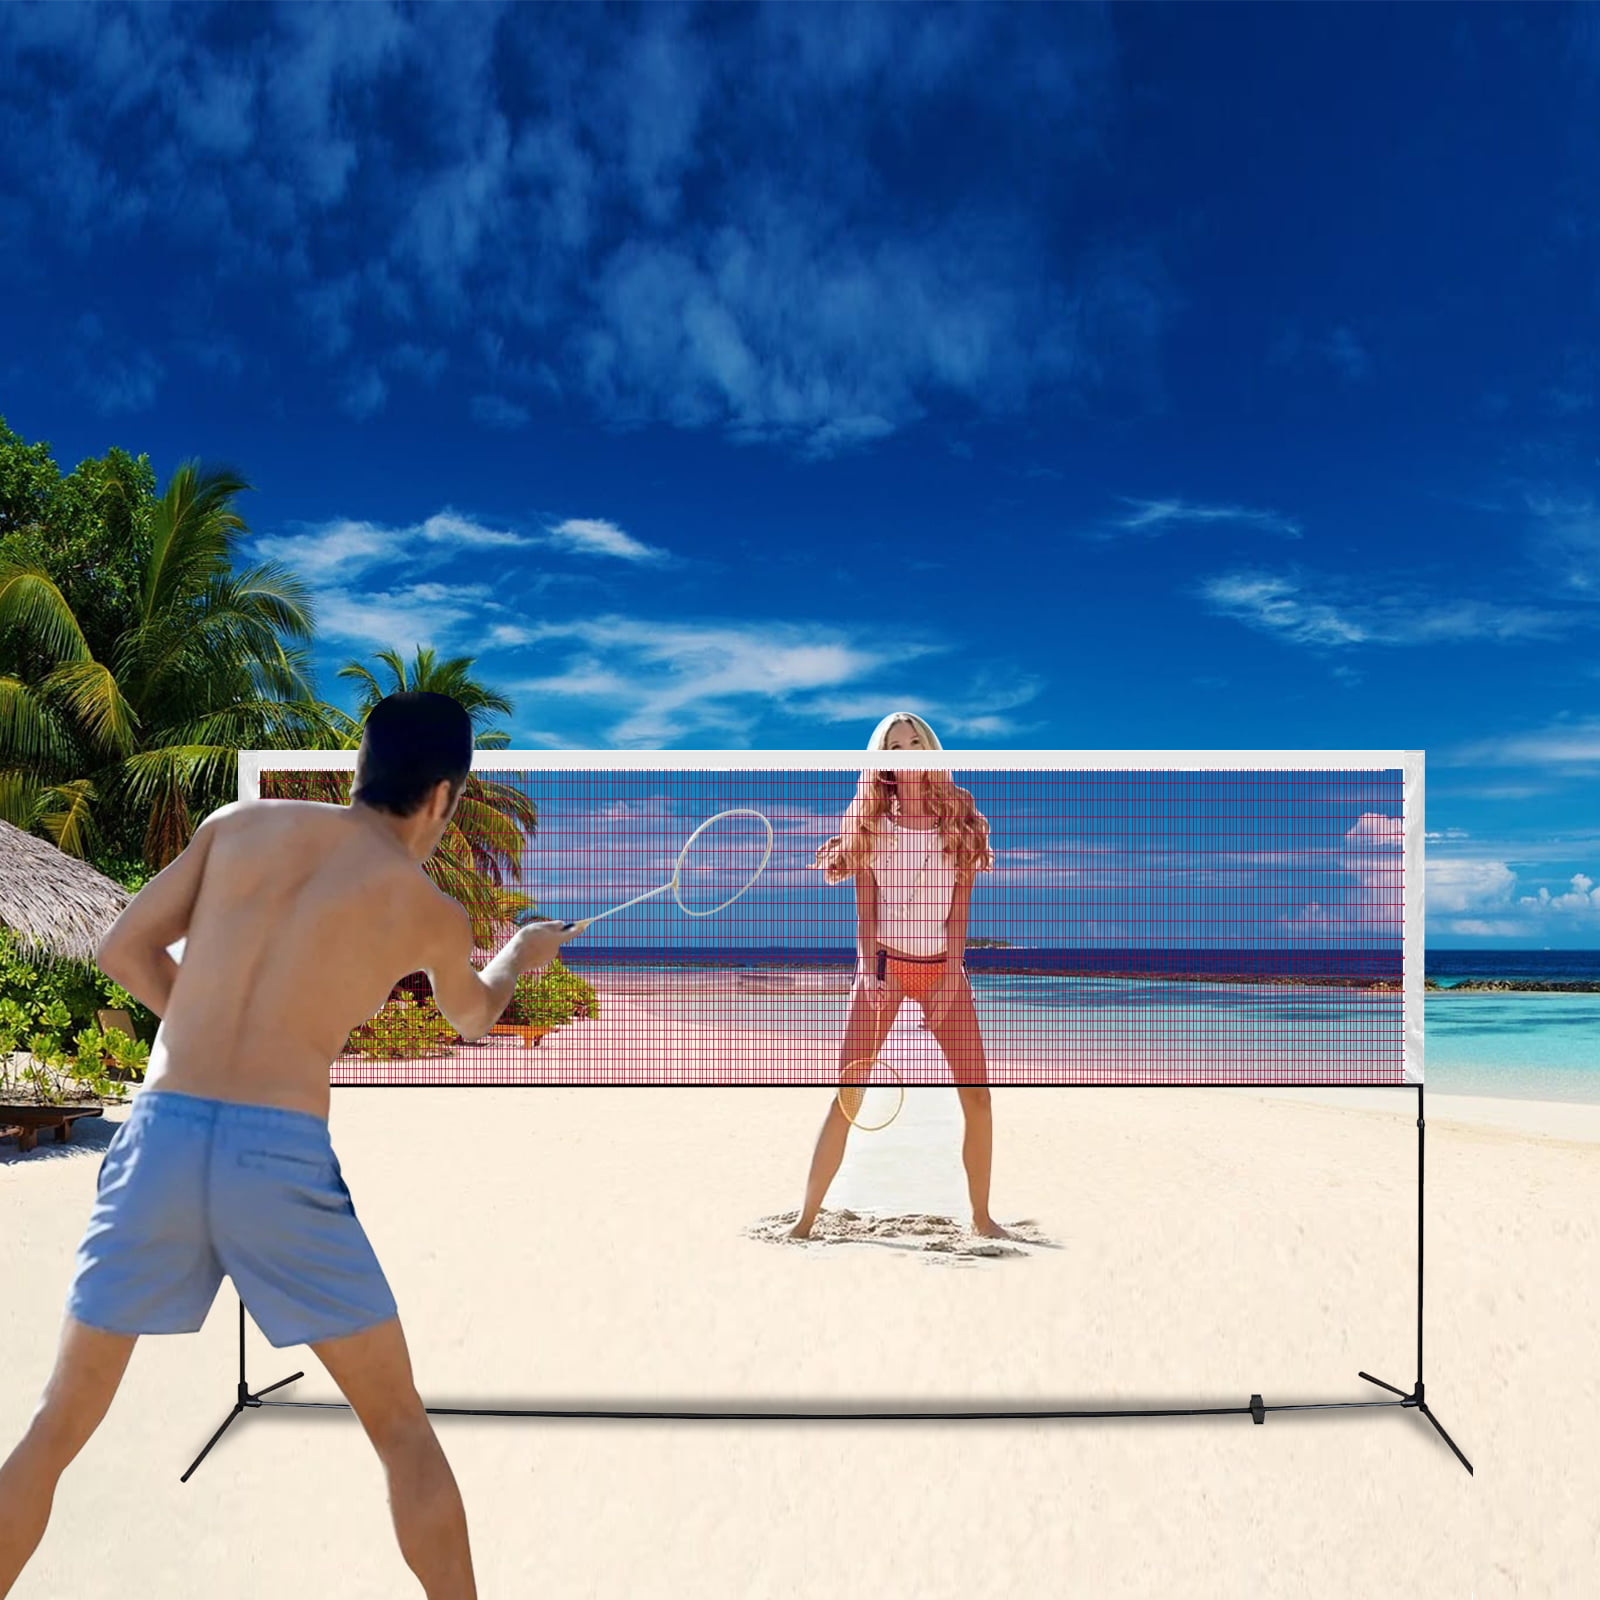 Training Beach Net For Garden Indoor Outdoor Games Badminton Volleyball Portable 